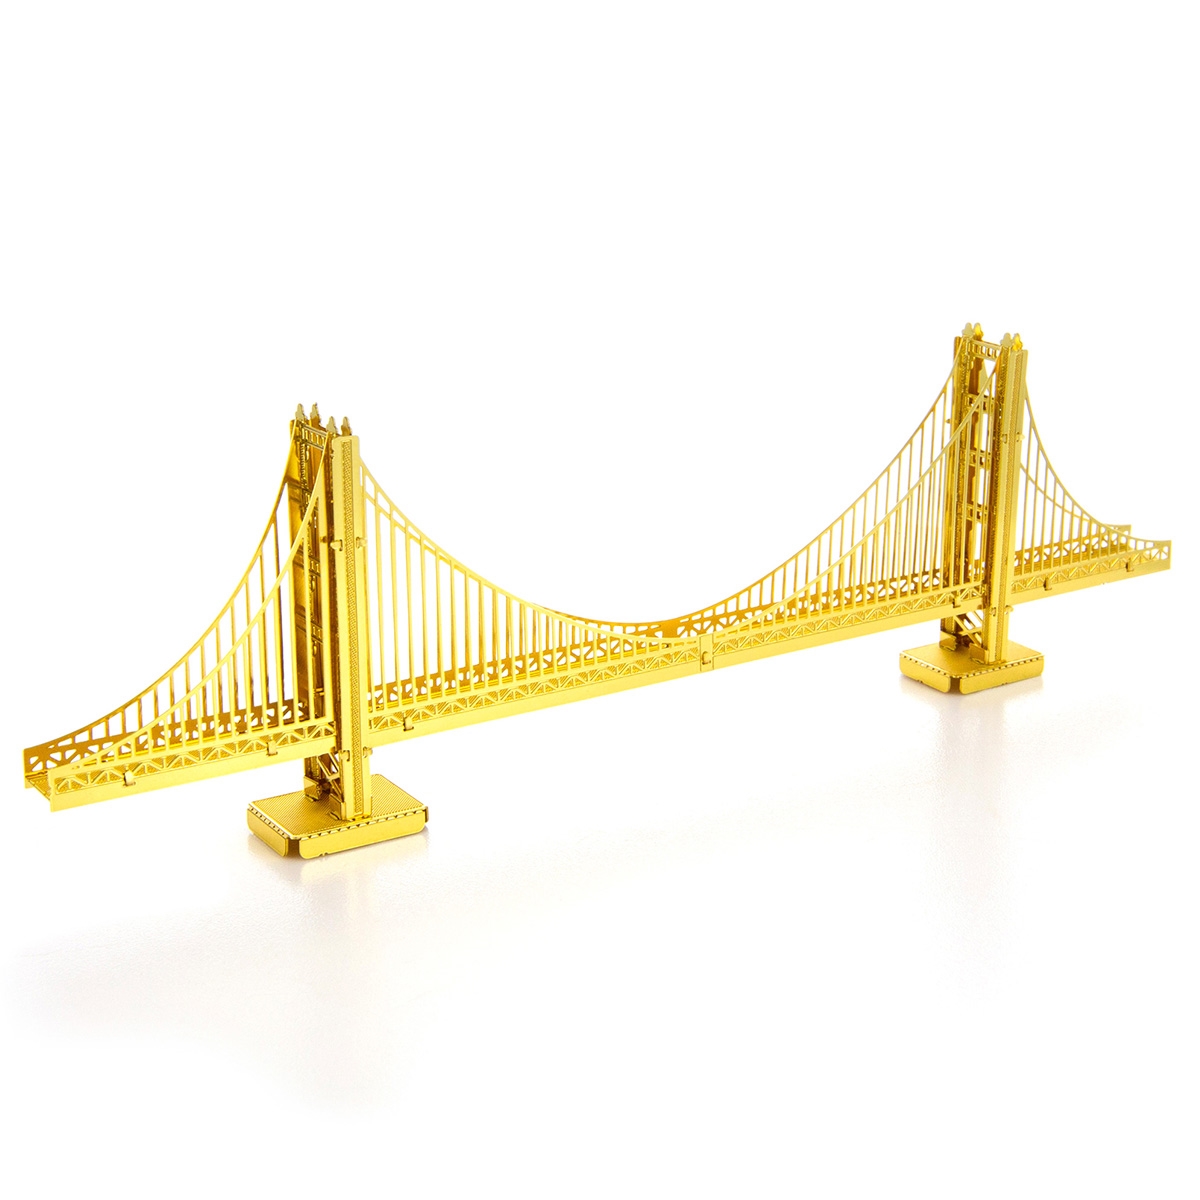 Set of 2 Metal Earth 3D Steel Model Kit GOLD and Silver SF Golden Gate Bridge 